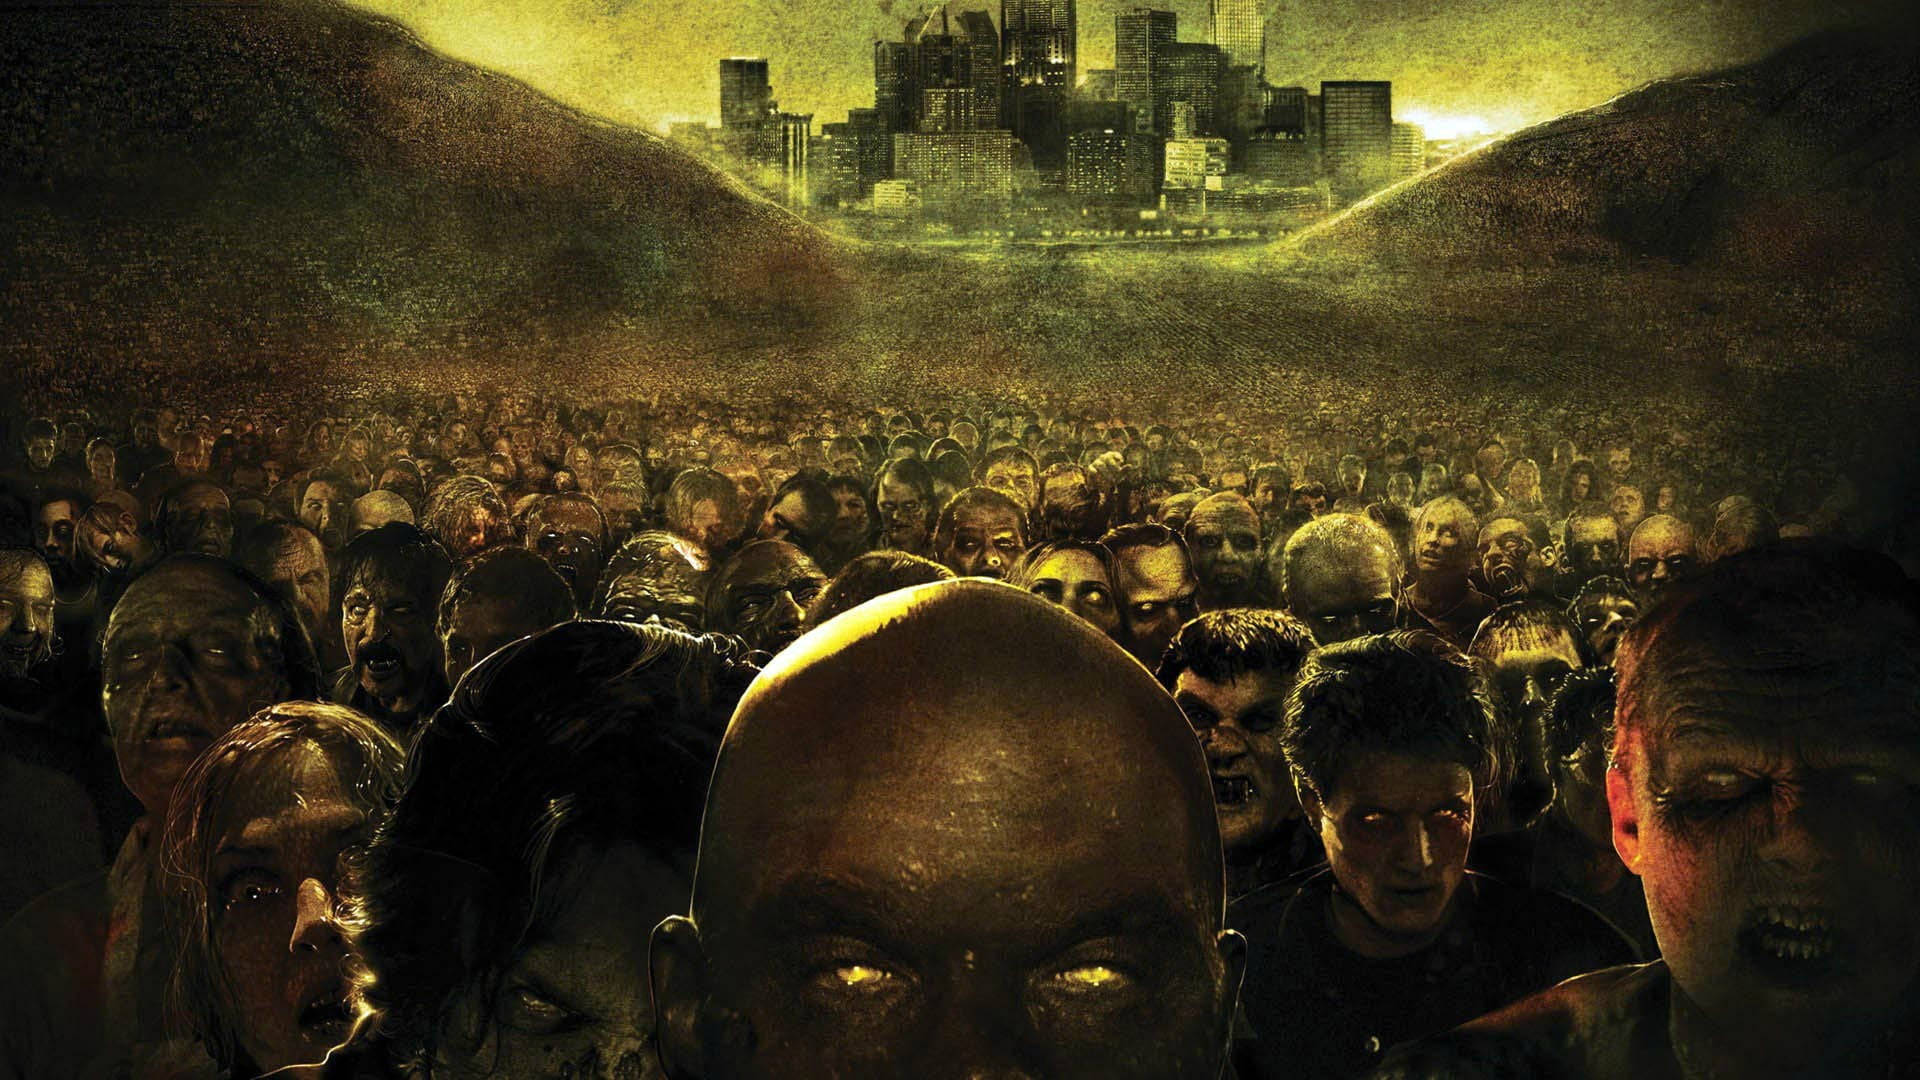 A Gloomy Glimpse Into A Zombie Apocalypse Wallpaper